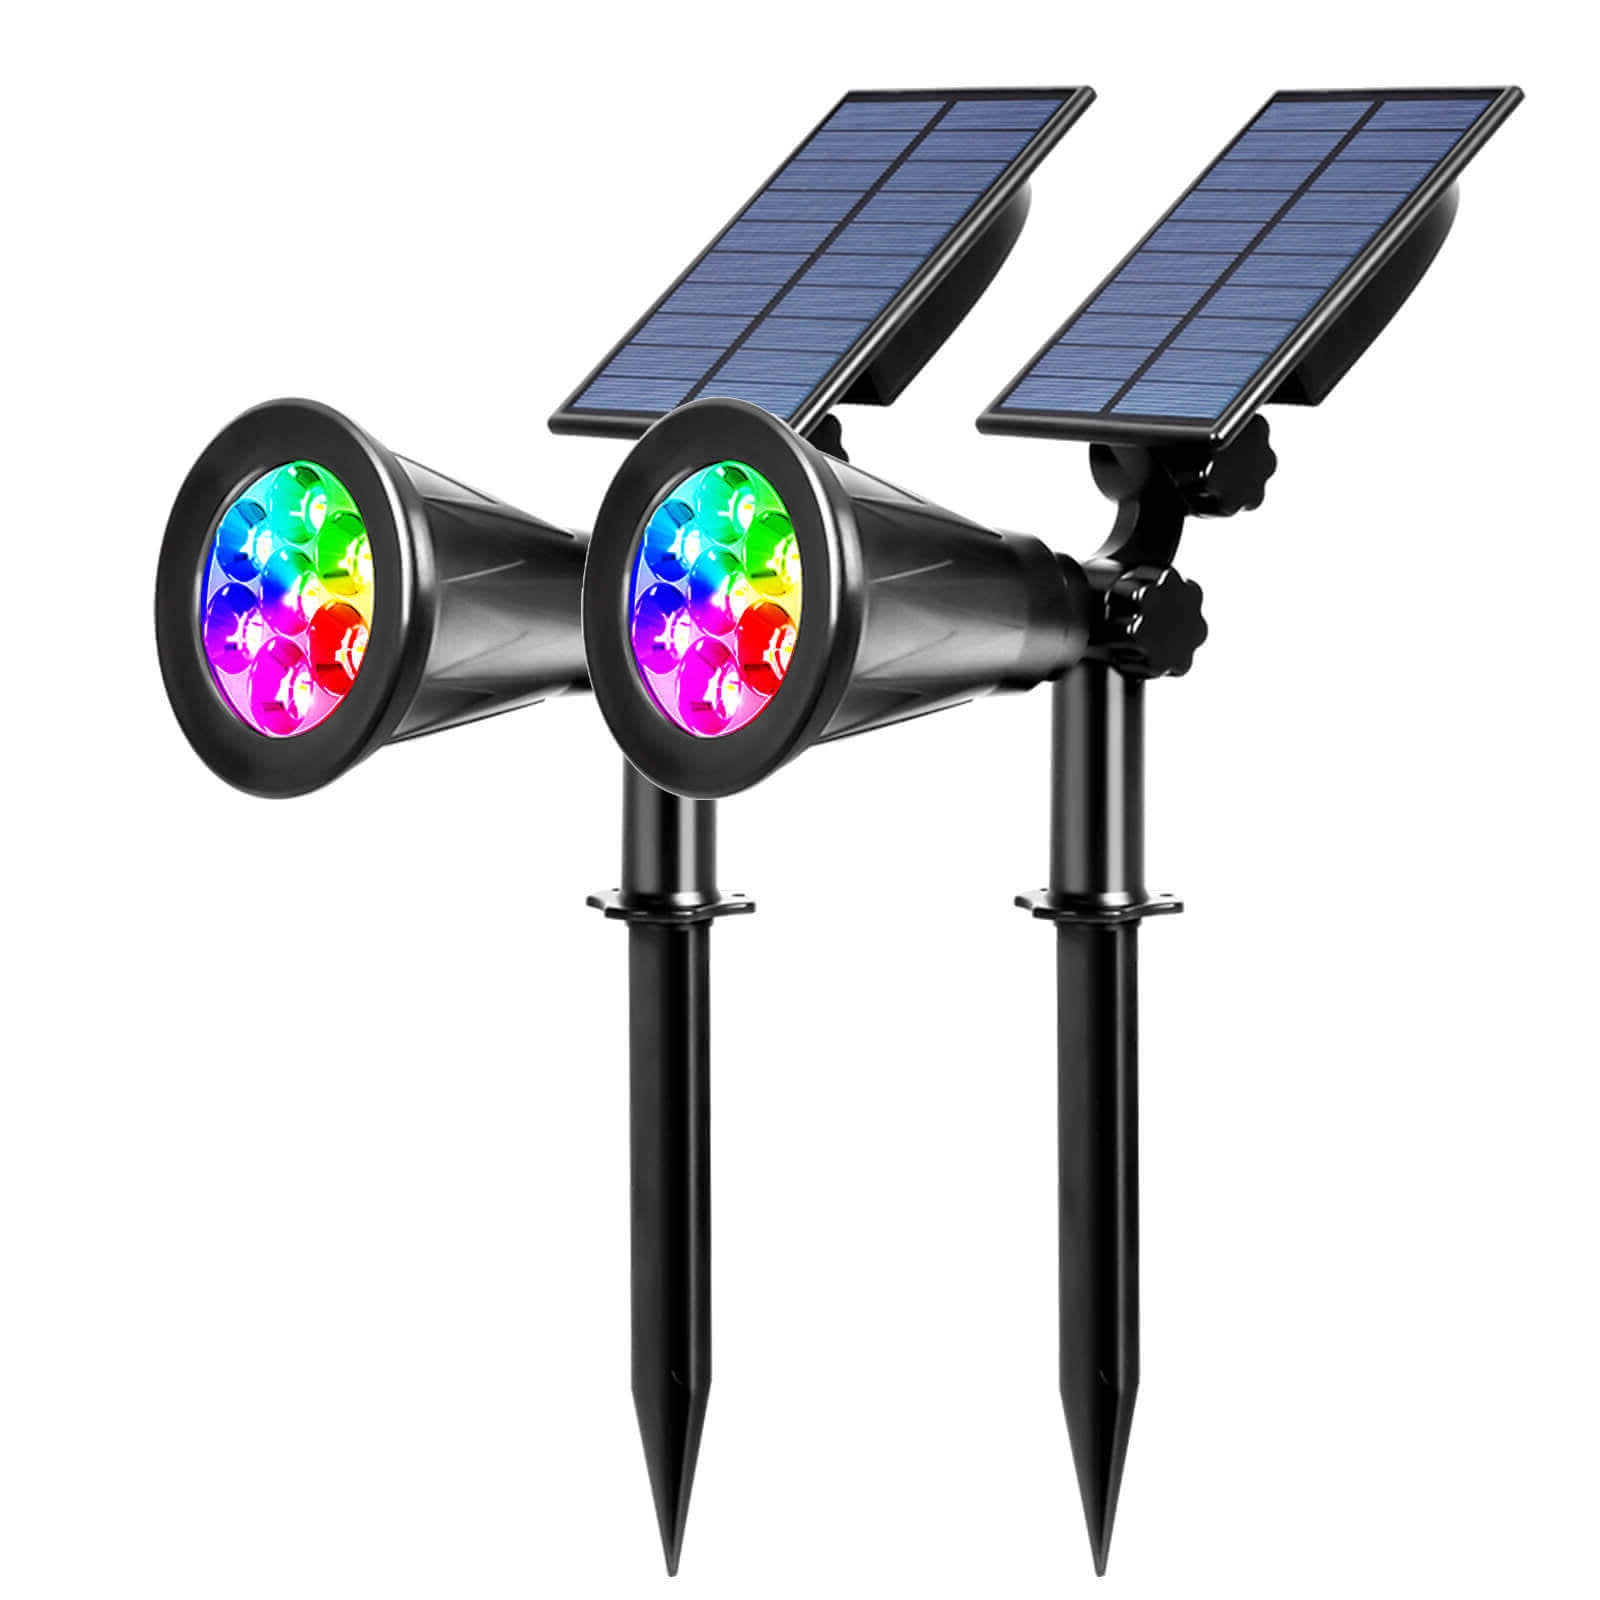 Colored solar spotlights 2 pack